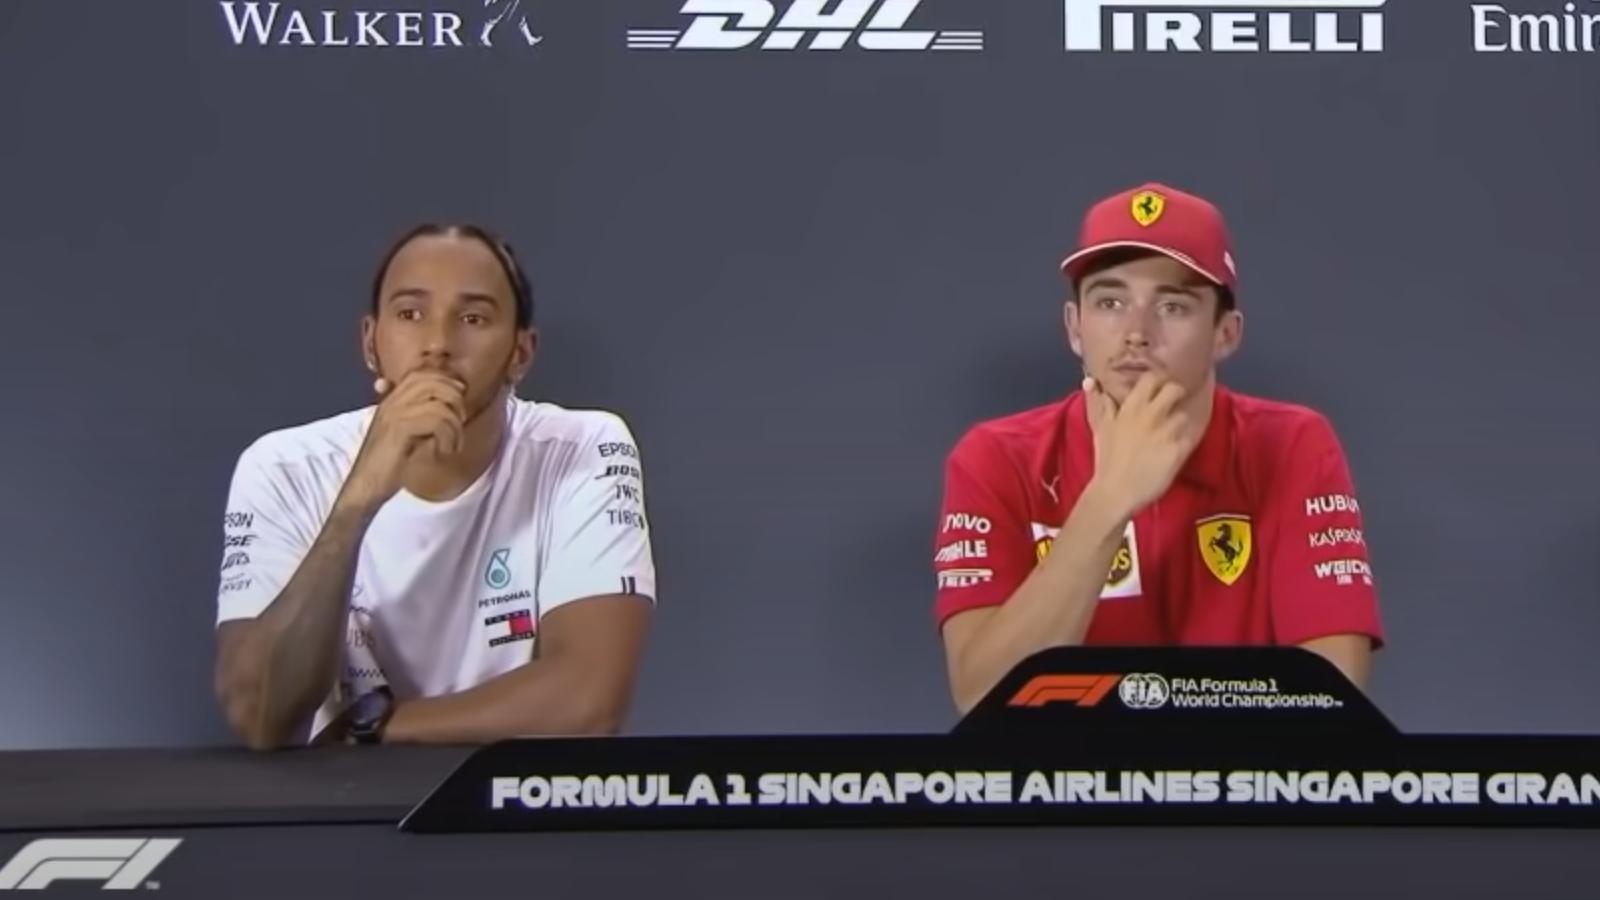 Hamilton and Leclerc will be teammates next year